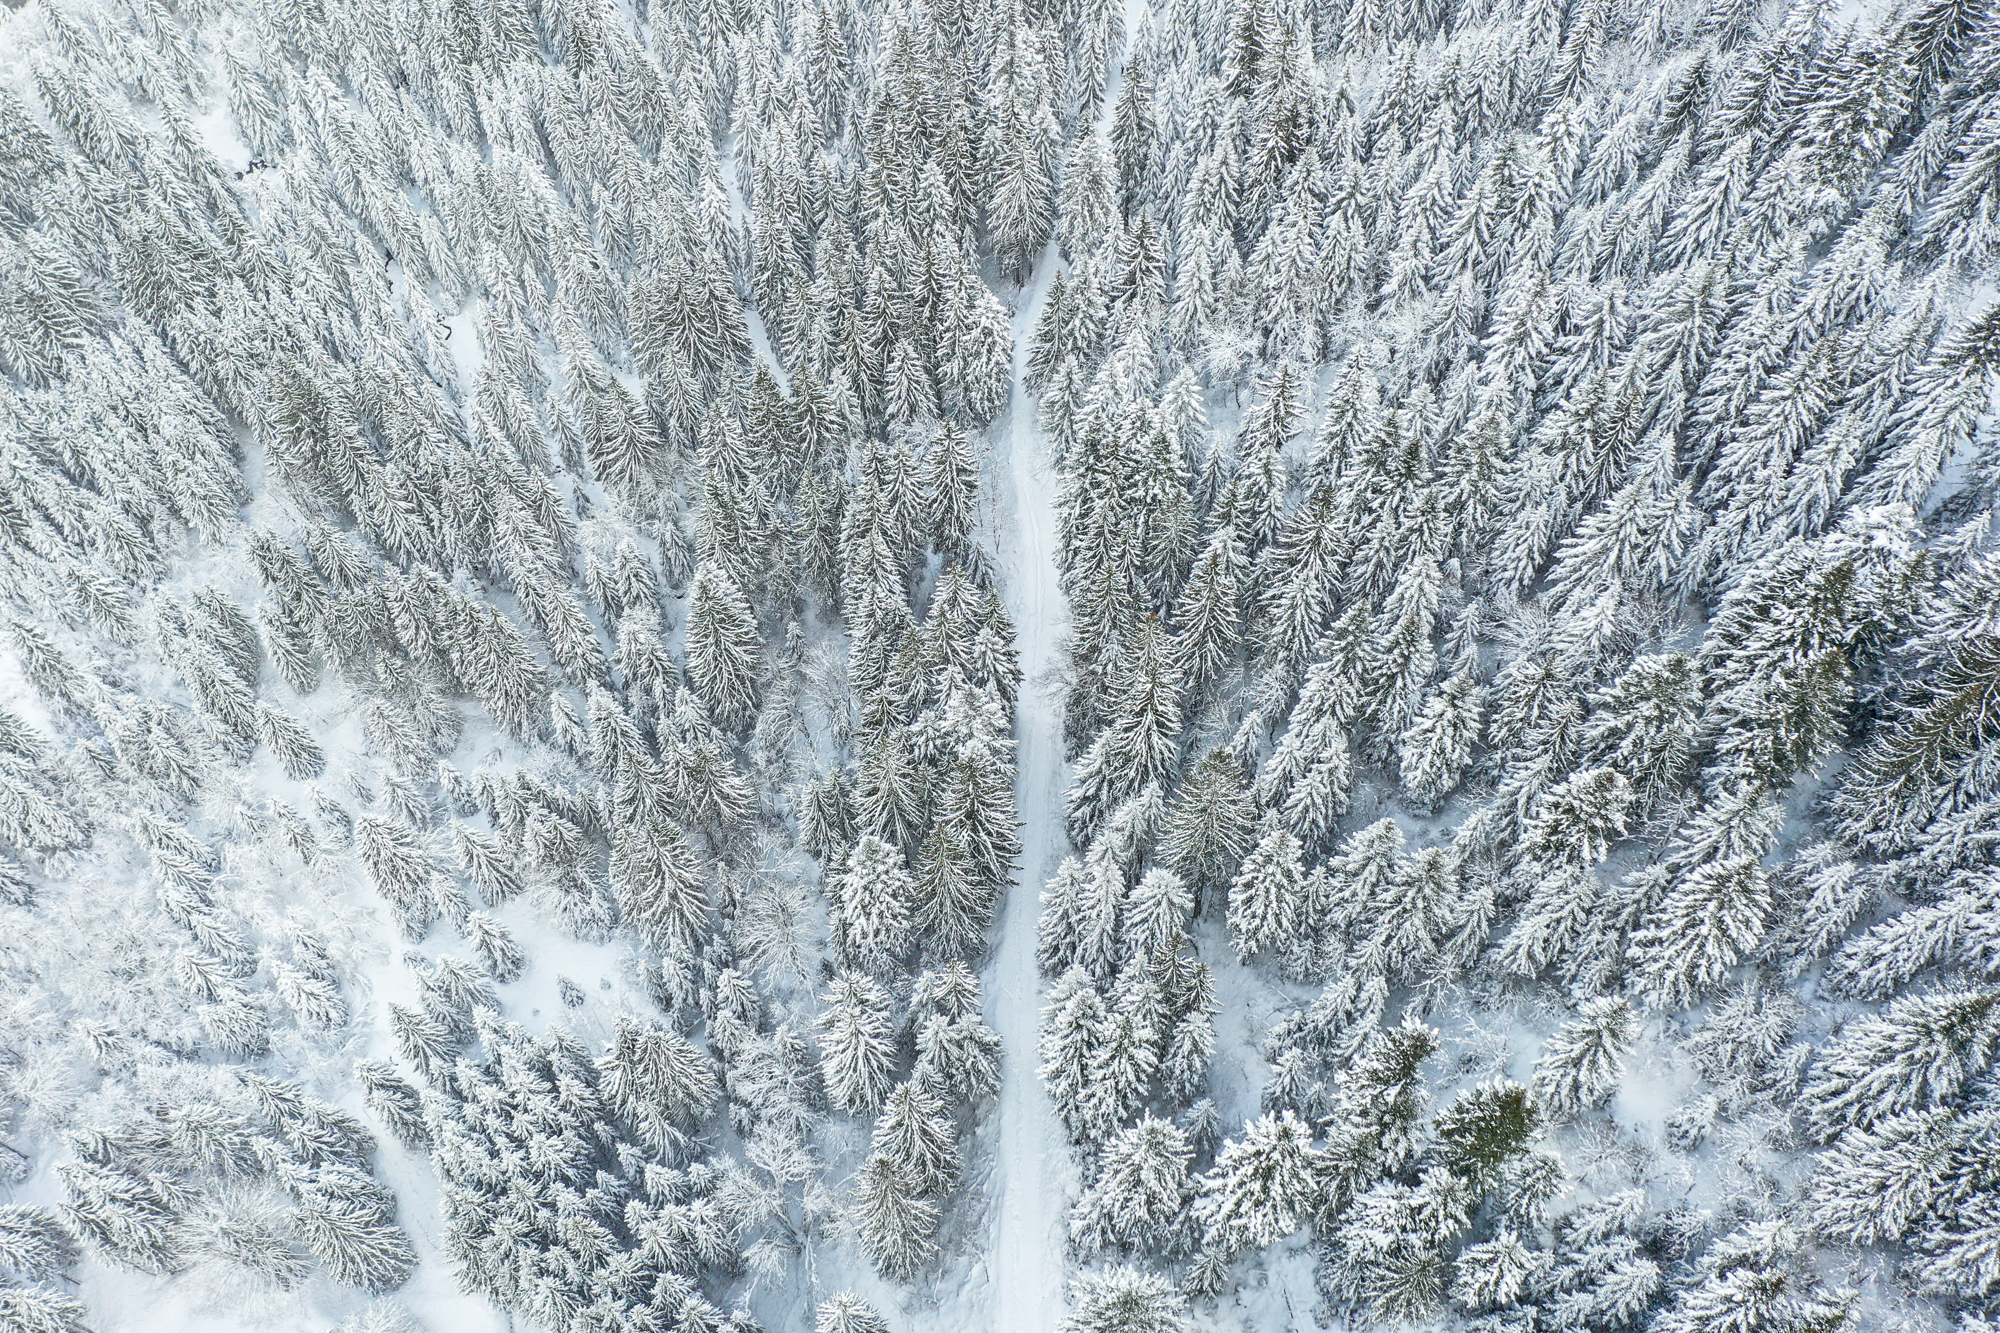 Chemin dans la forêt pleine de neige